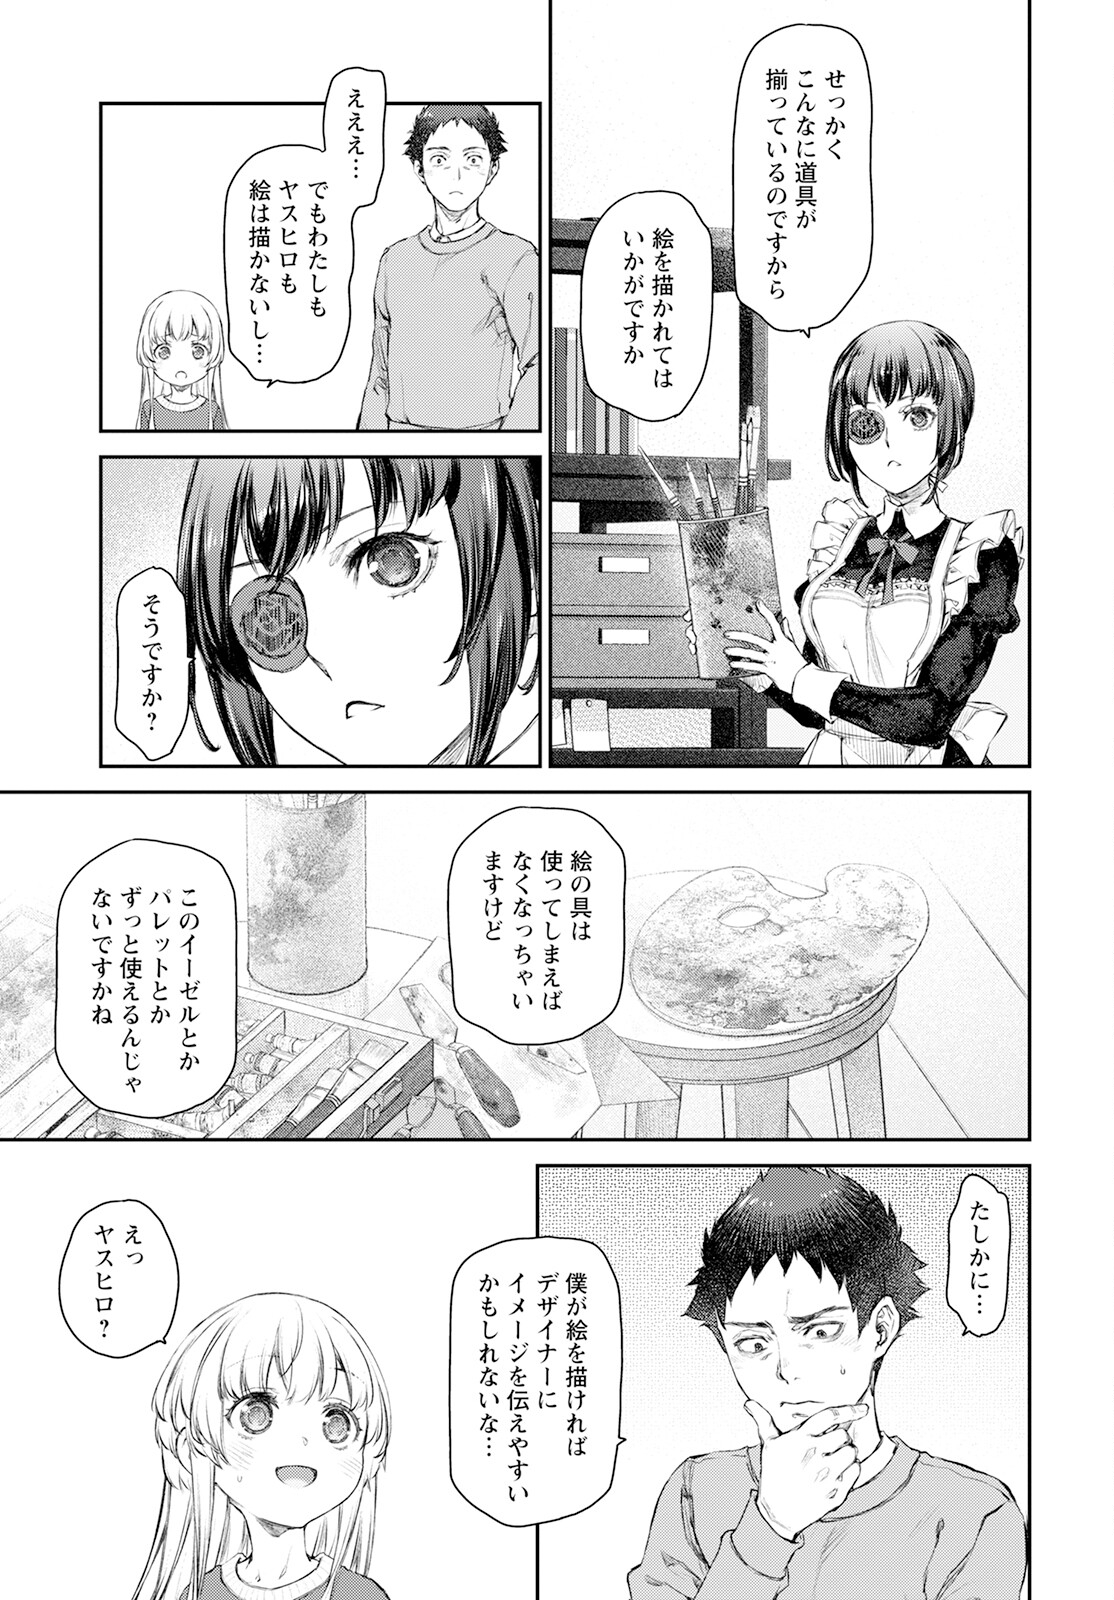 Uchi no Maid ga Uzasugiru! - Chapter 58 - Page 21